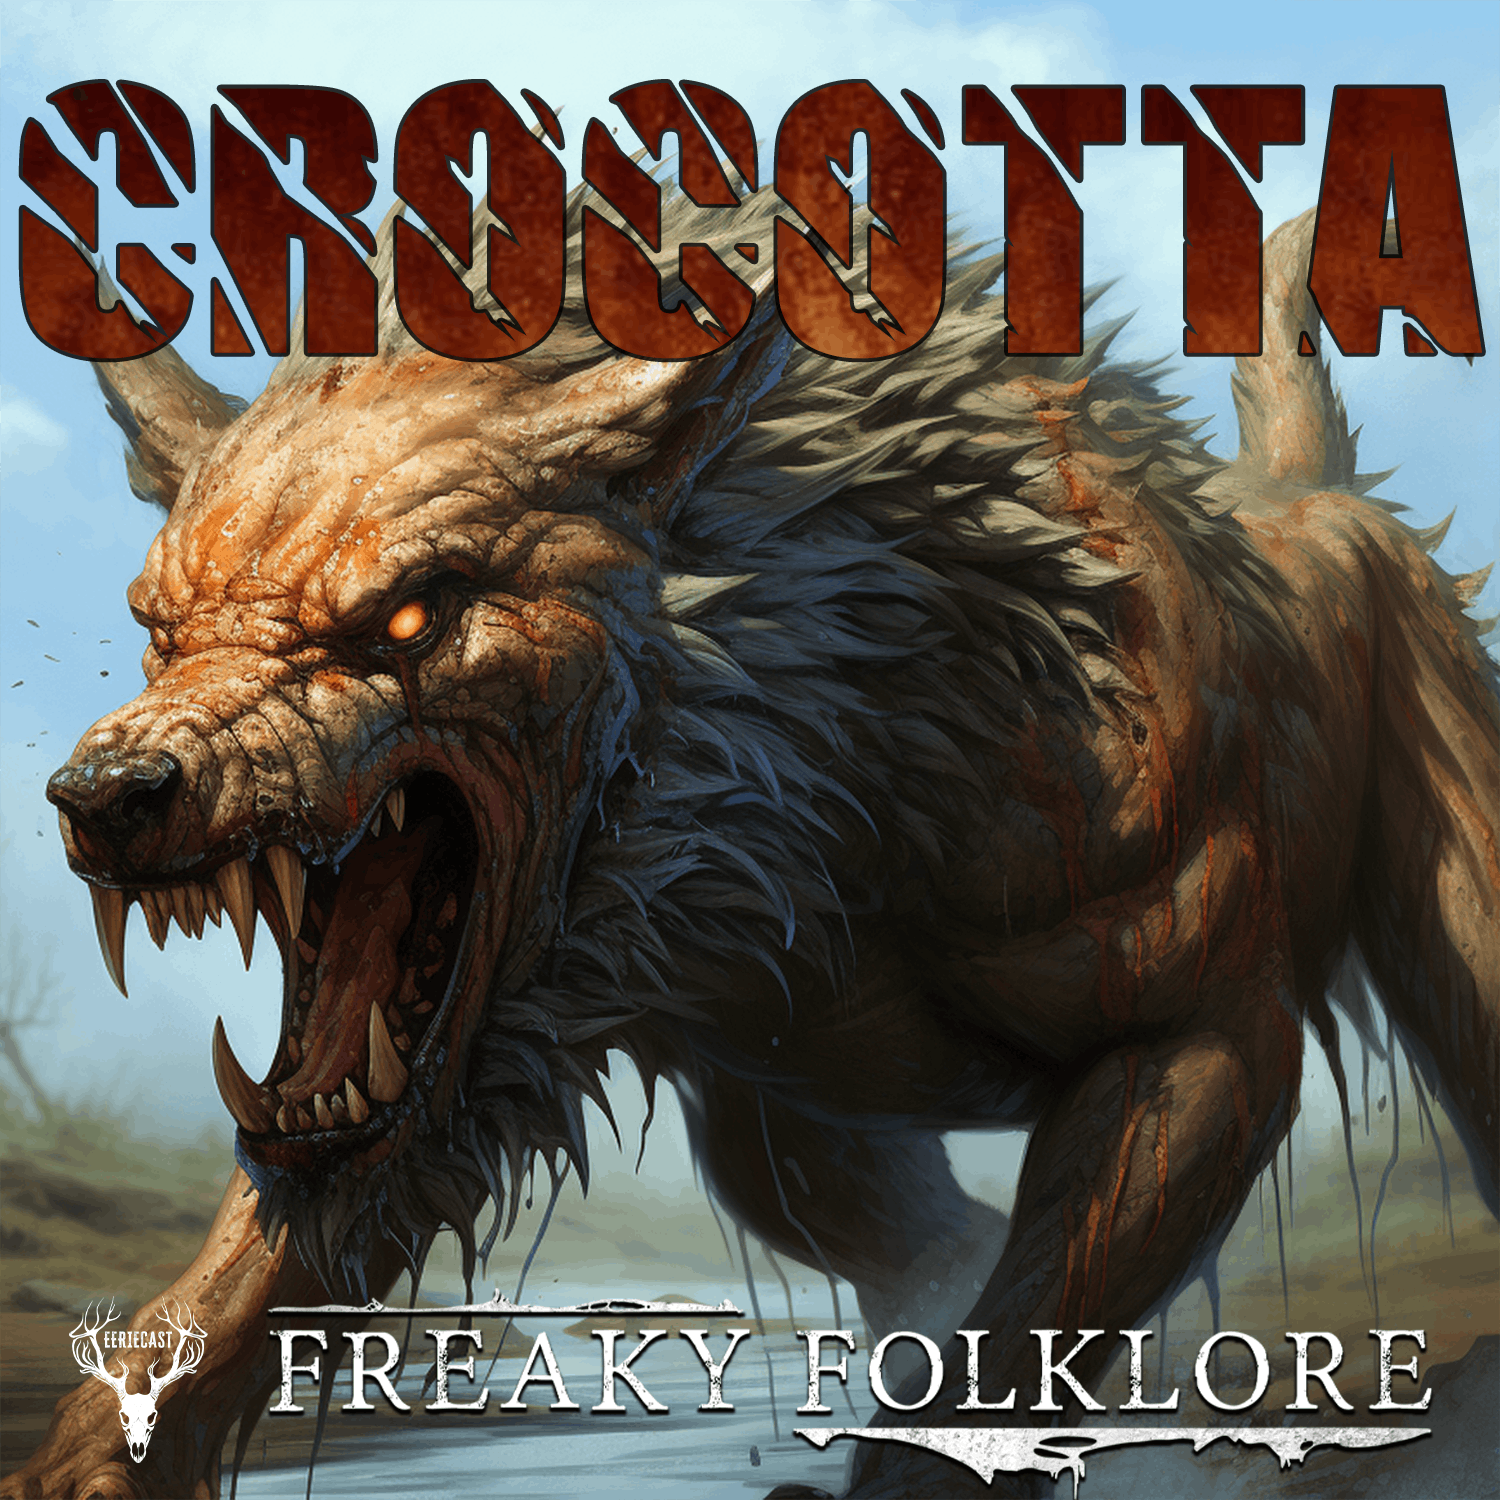 CROCOTTA – The Carnivorous Shapeshifting Deceiver